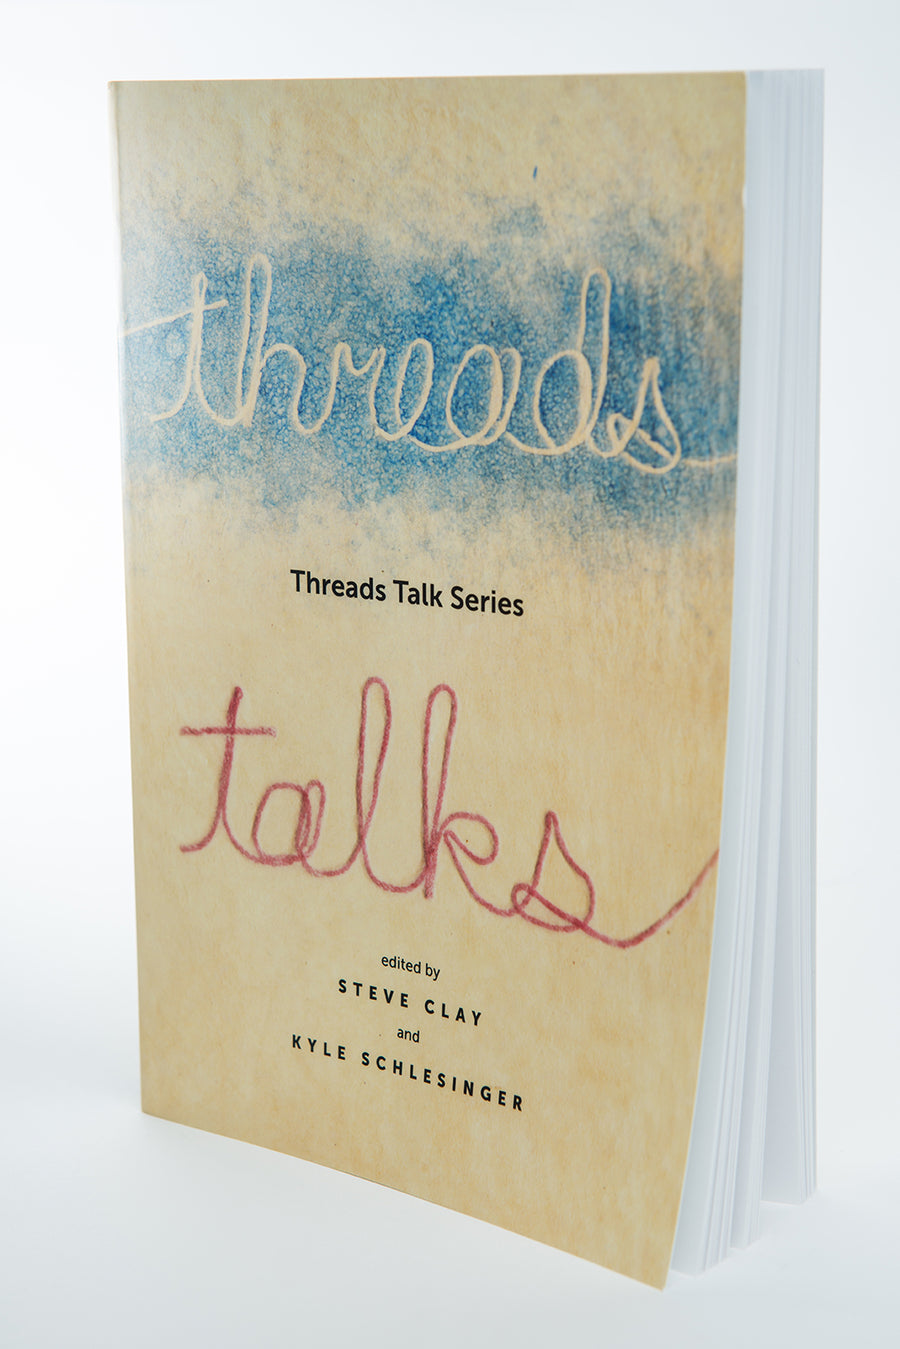 Steve Clay & Kyle Schlesinger : Threads Talks Series